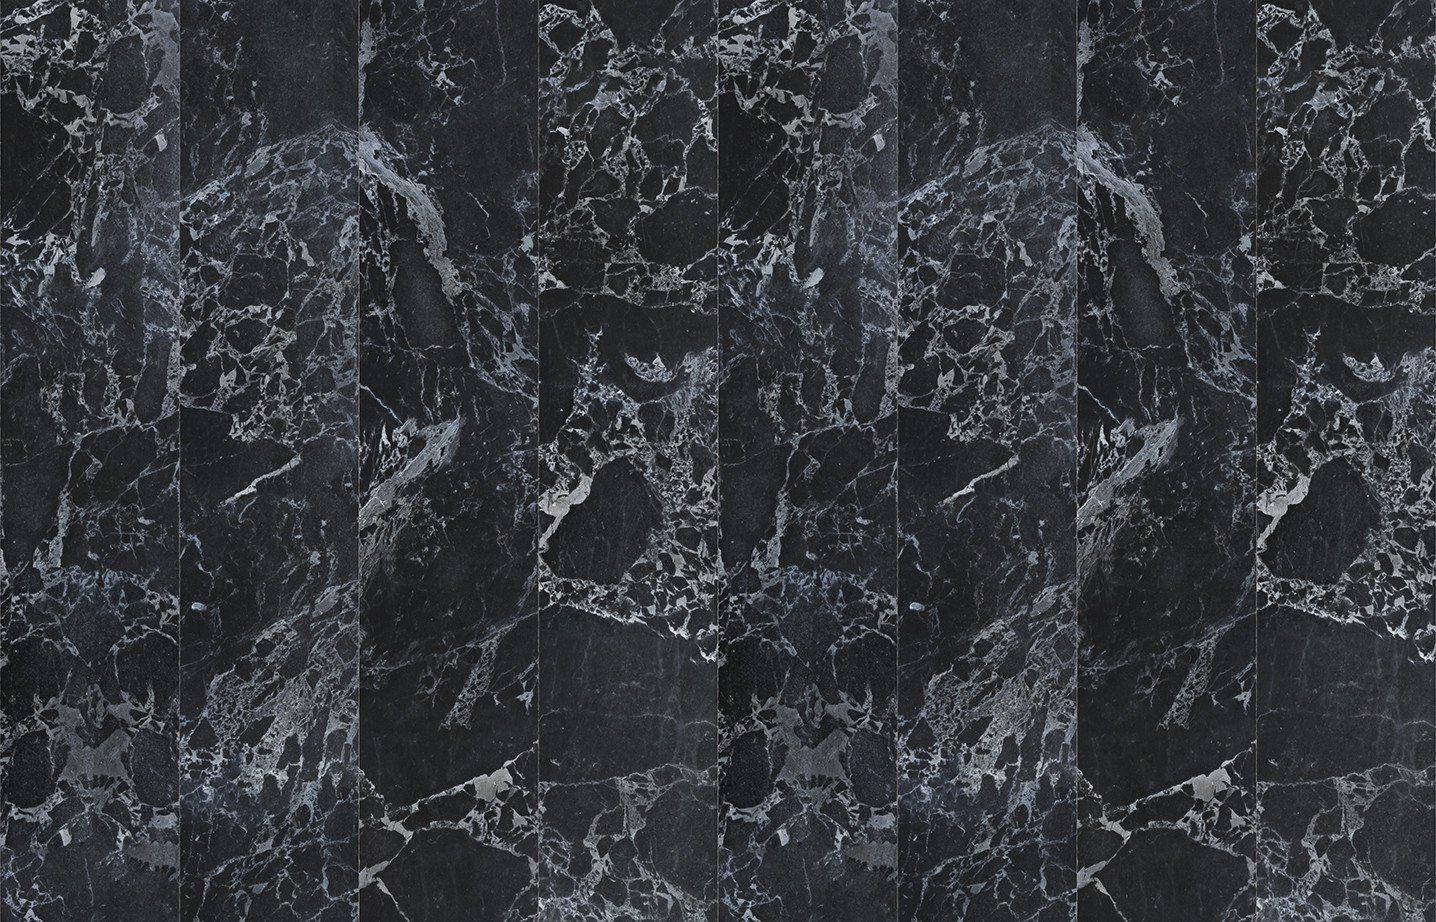 Vertical Tiles On Black Marble Iphone Wallpaper